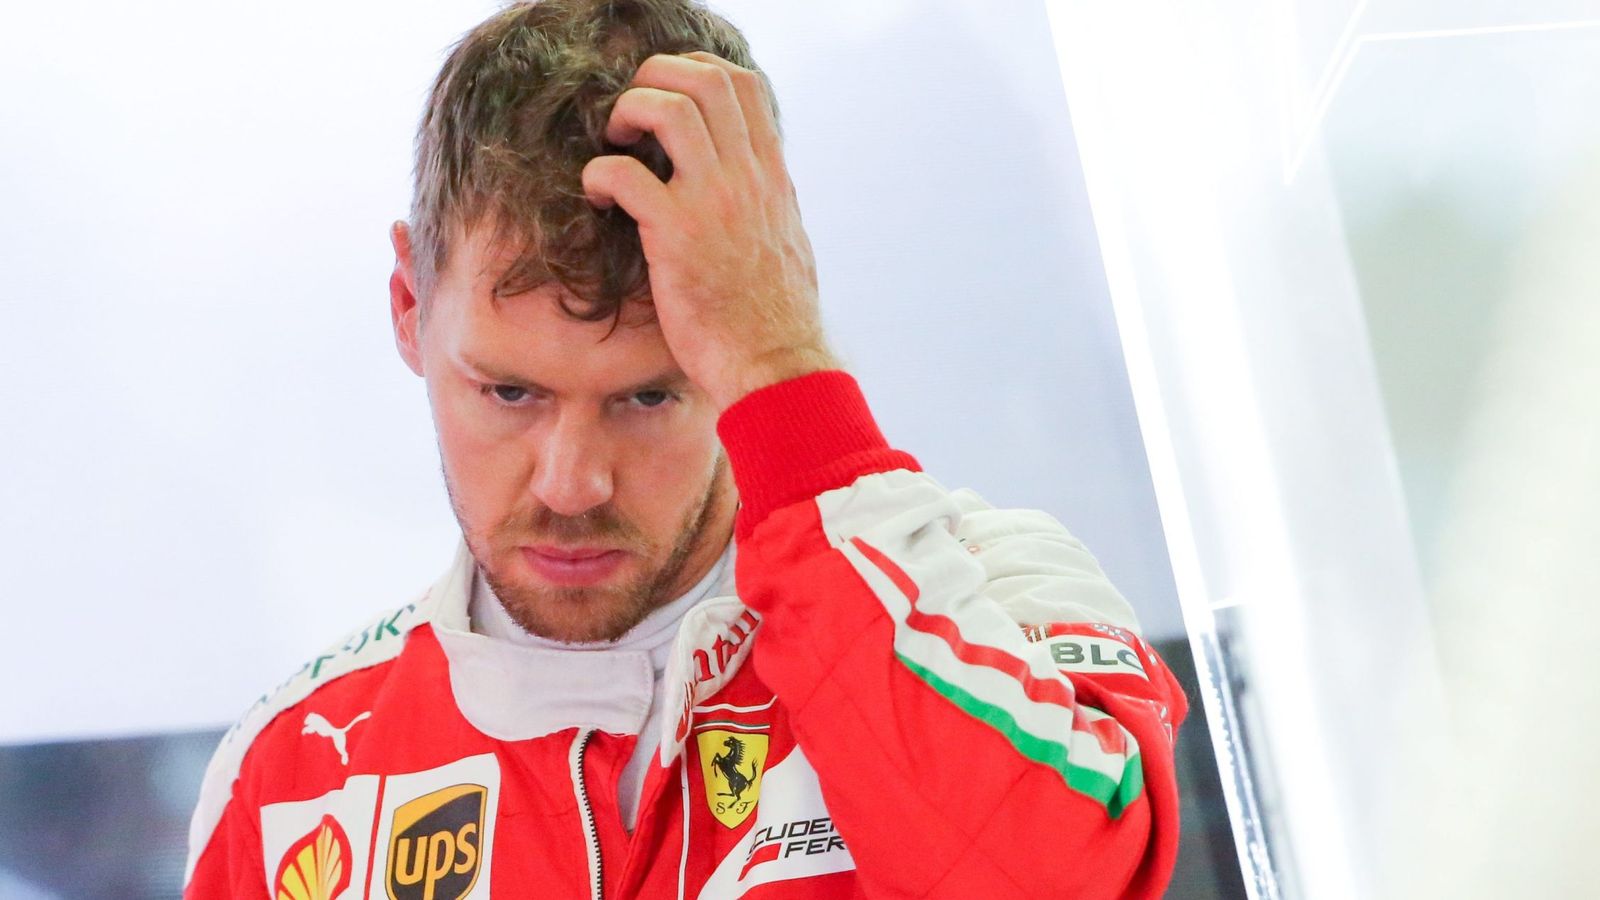 Foto: Sebastian Vettel en su box durante este GP de Japón.